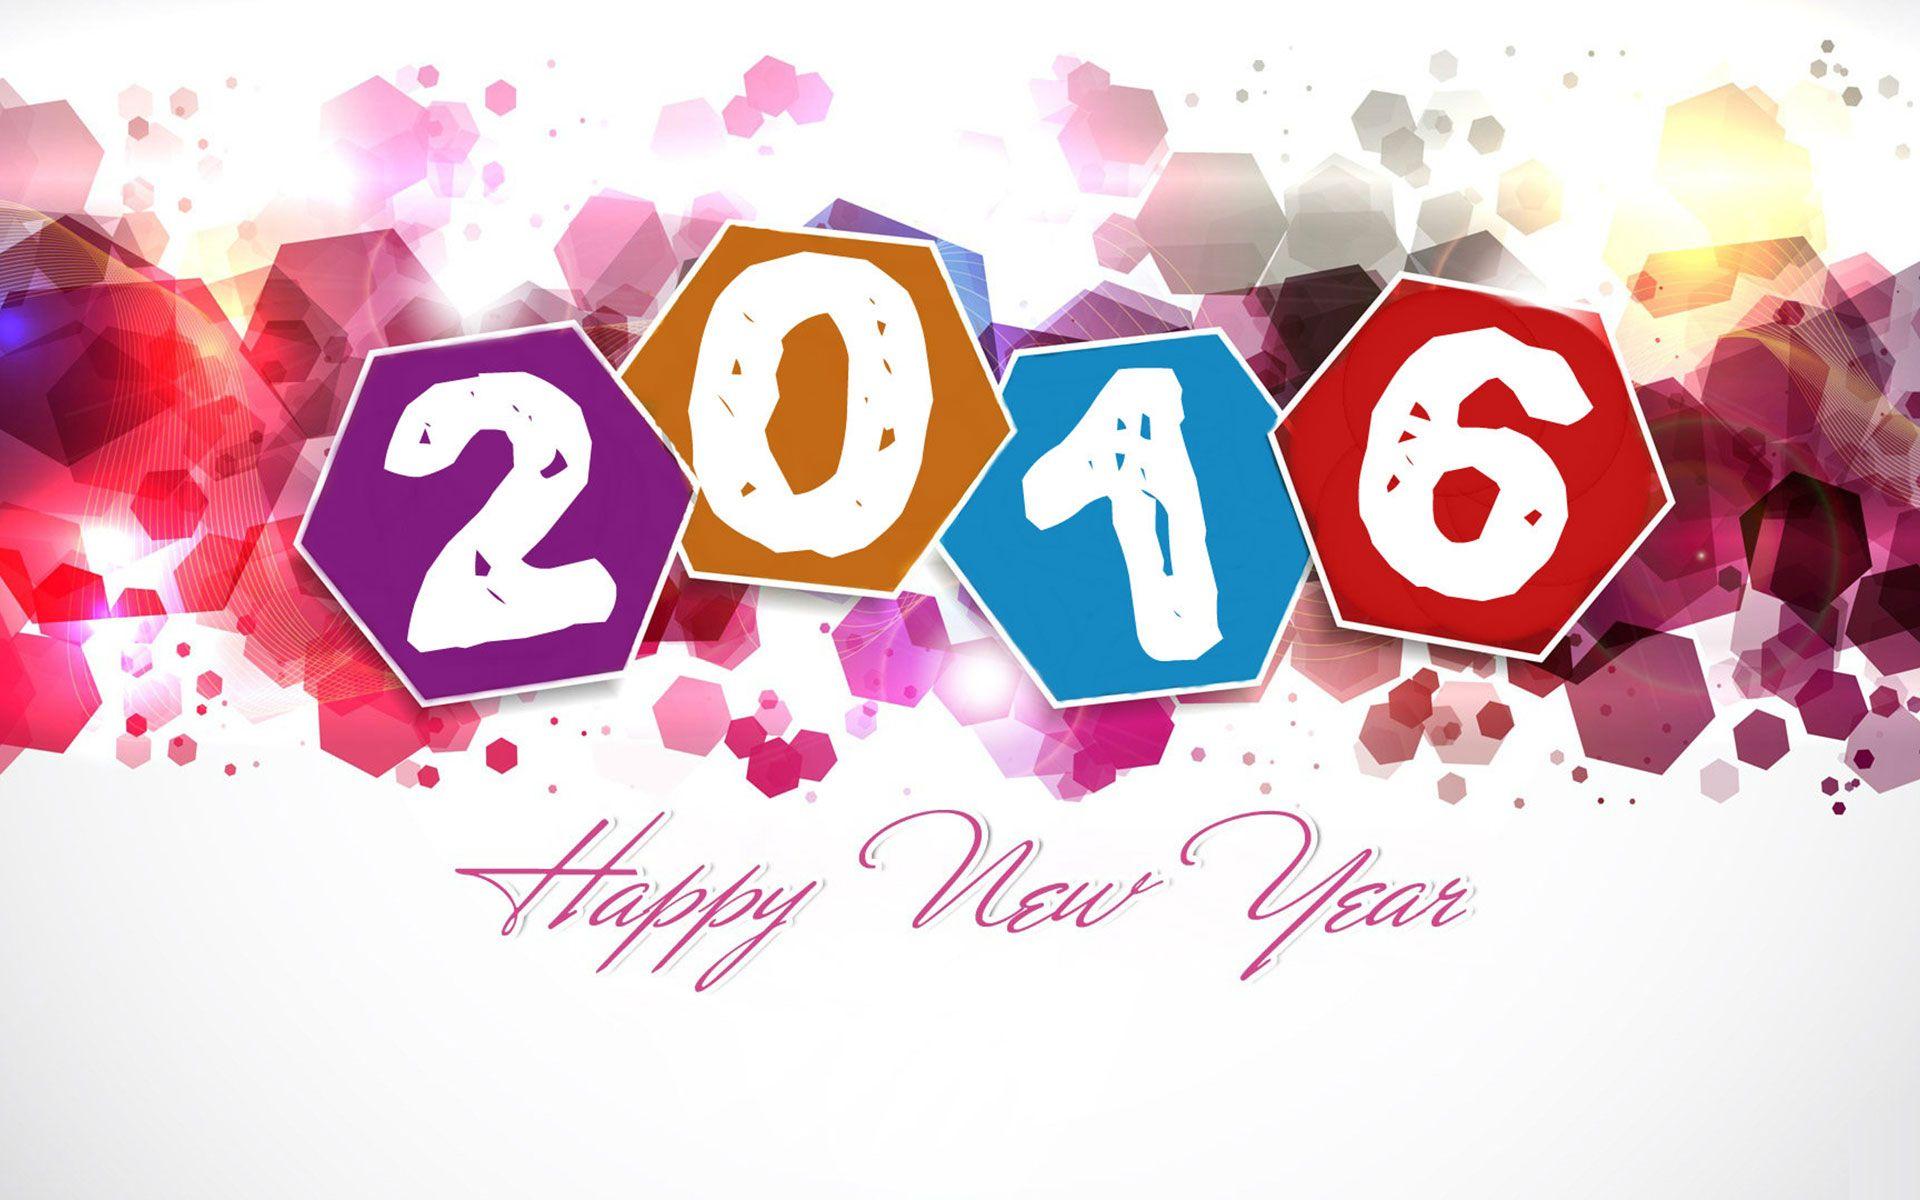 Celebrations 2016 New Year wallpaper Desktop, Phone, Tablet